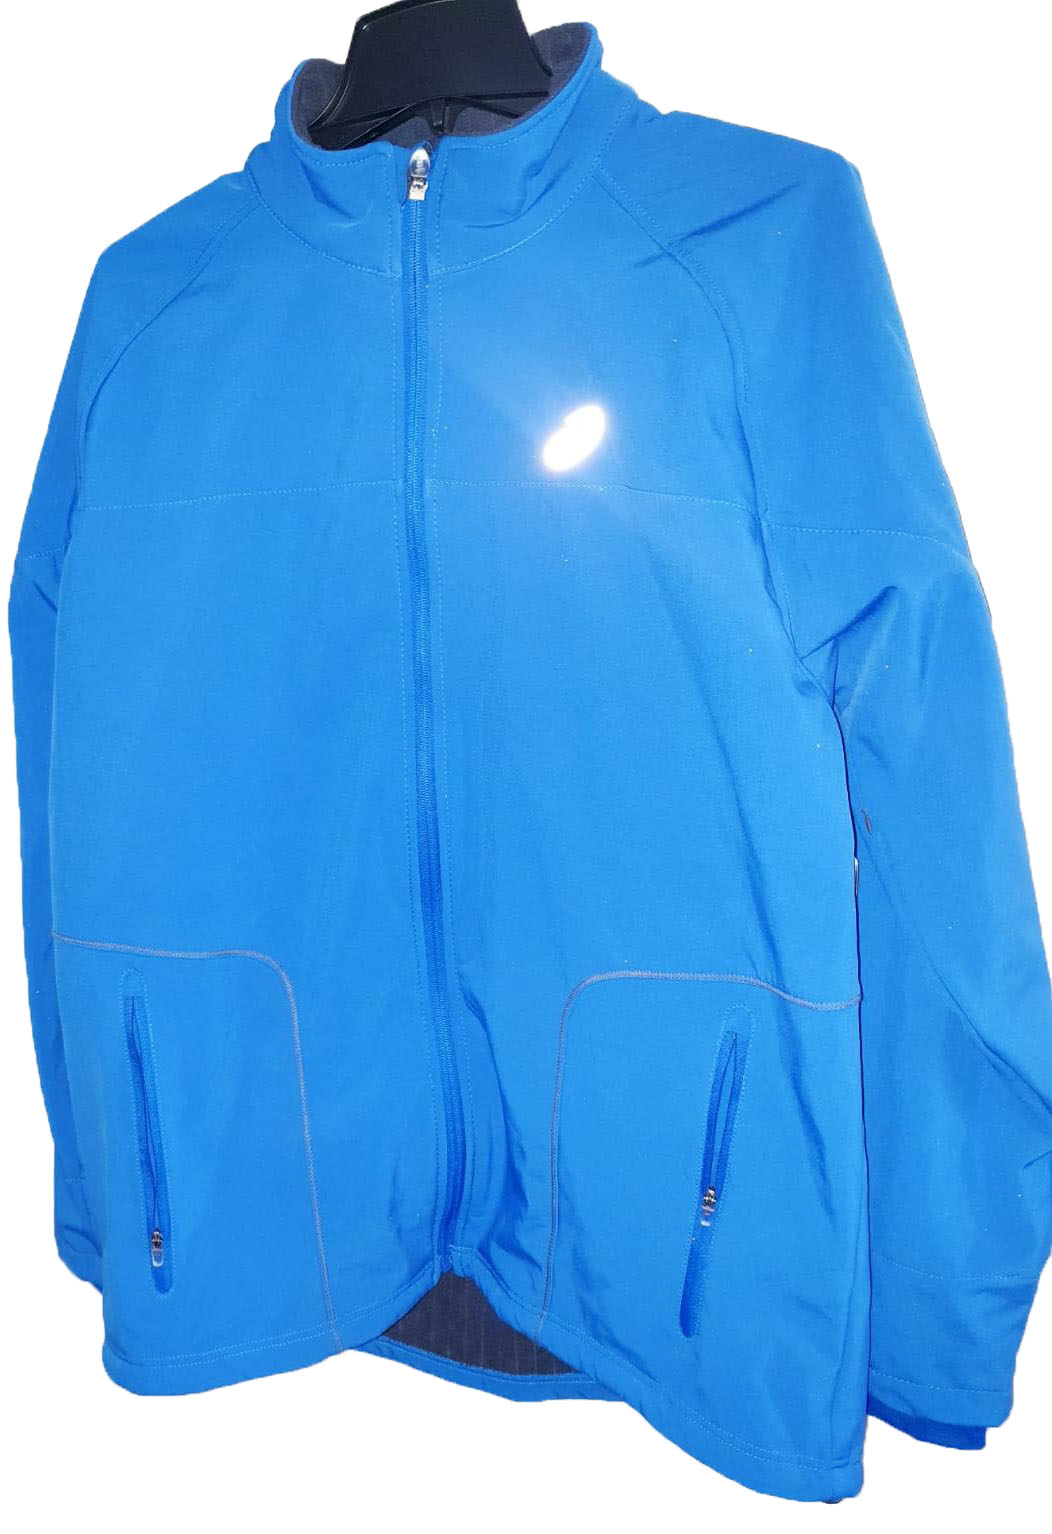 Asics Men's Ultra Waterproof Running Jacket, Blue, Large 889436280954 ...